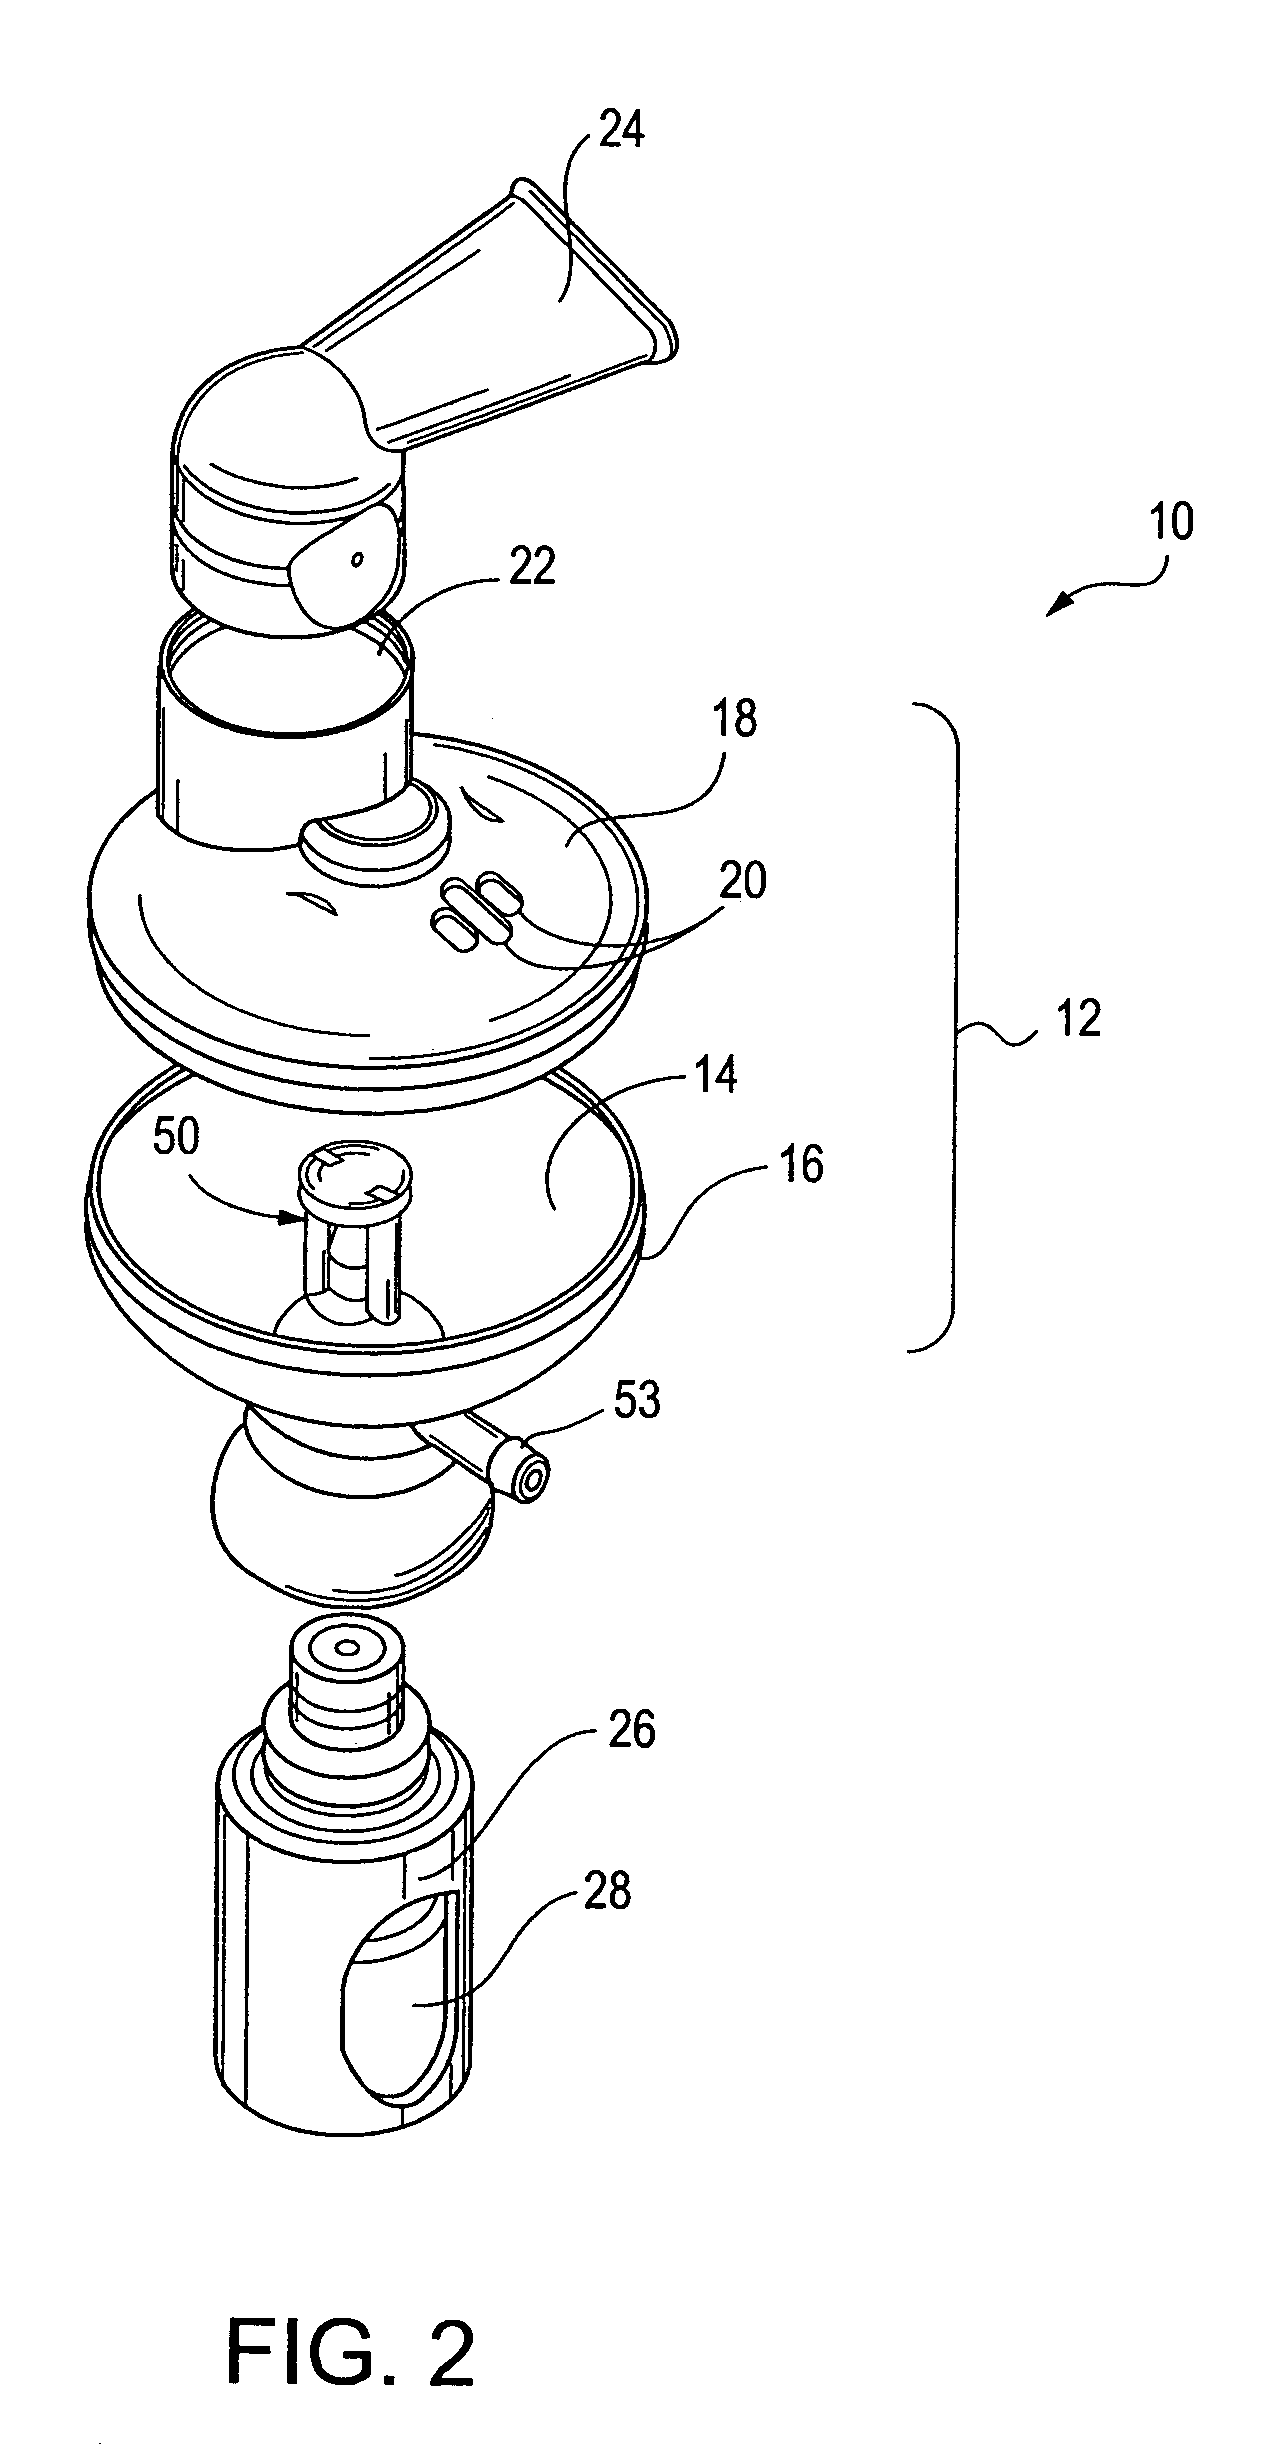 Nebulizer apparatus and method